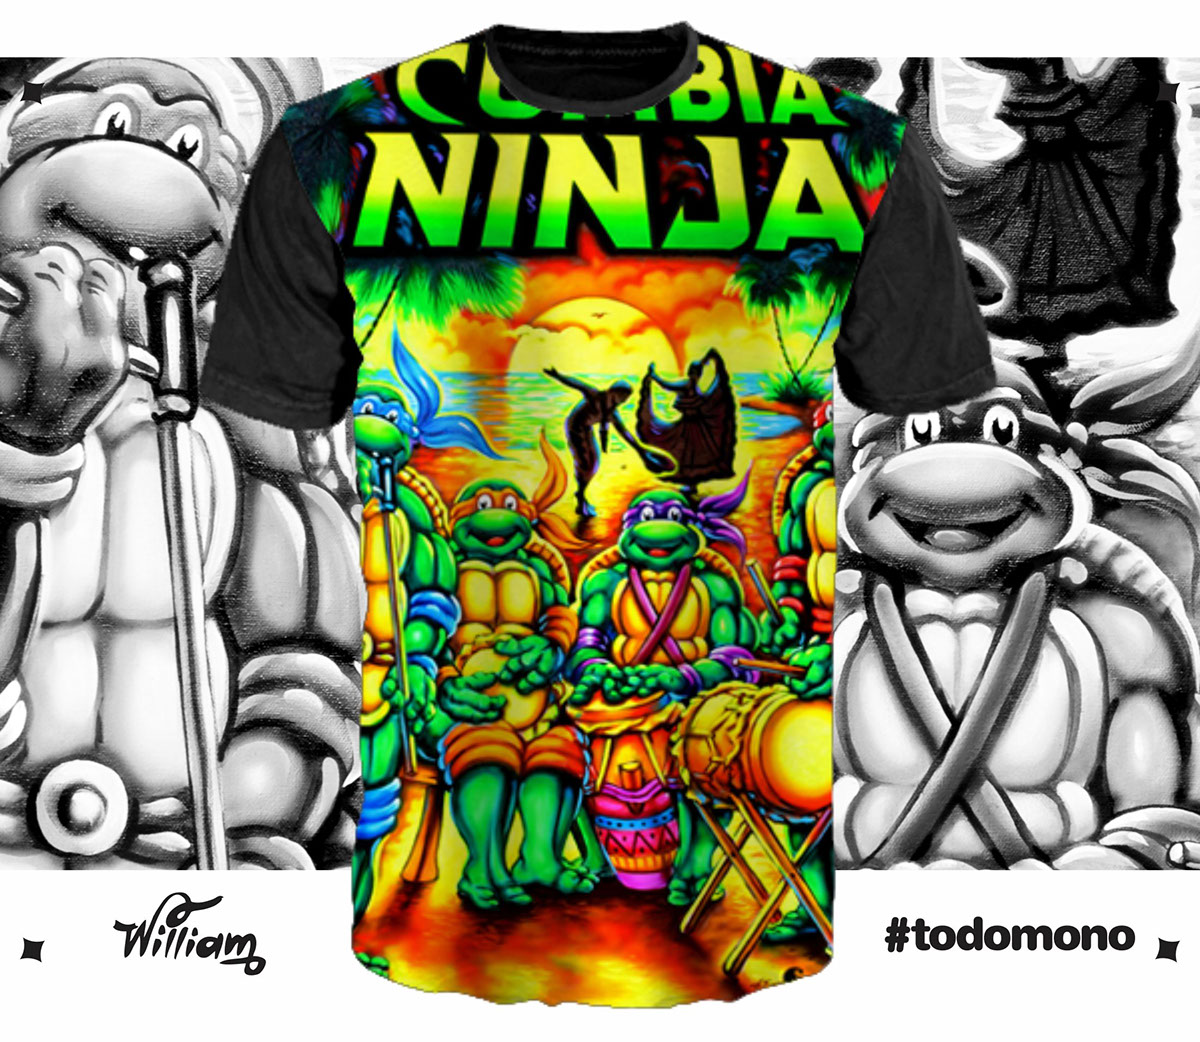 pico todomono barranquilla grafica picotera colombia he-man tortugas ninja Ninja Turtles thundercats star wars darth vader power Rangers red